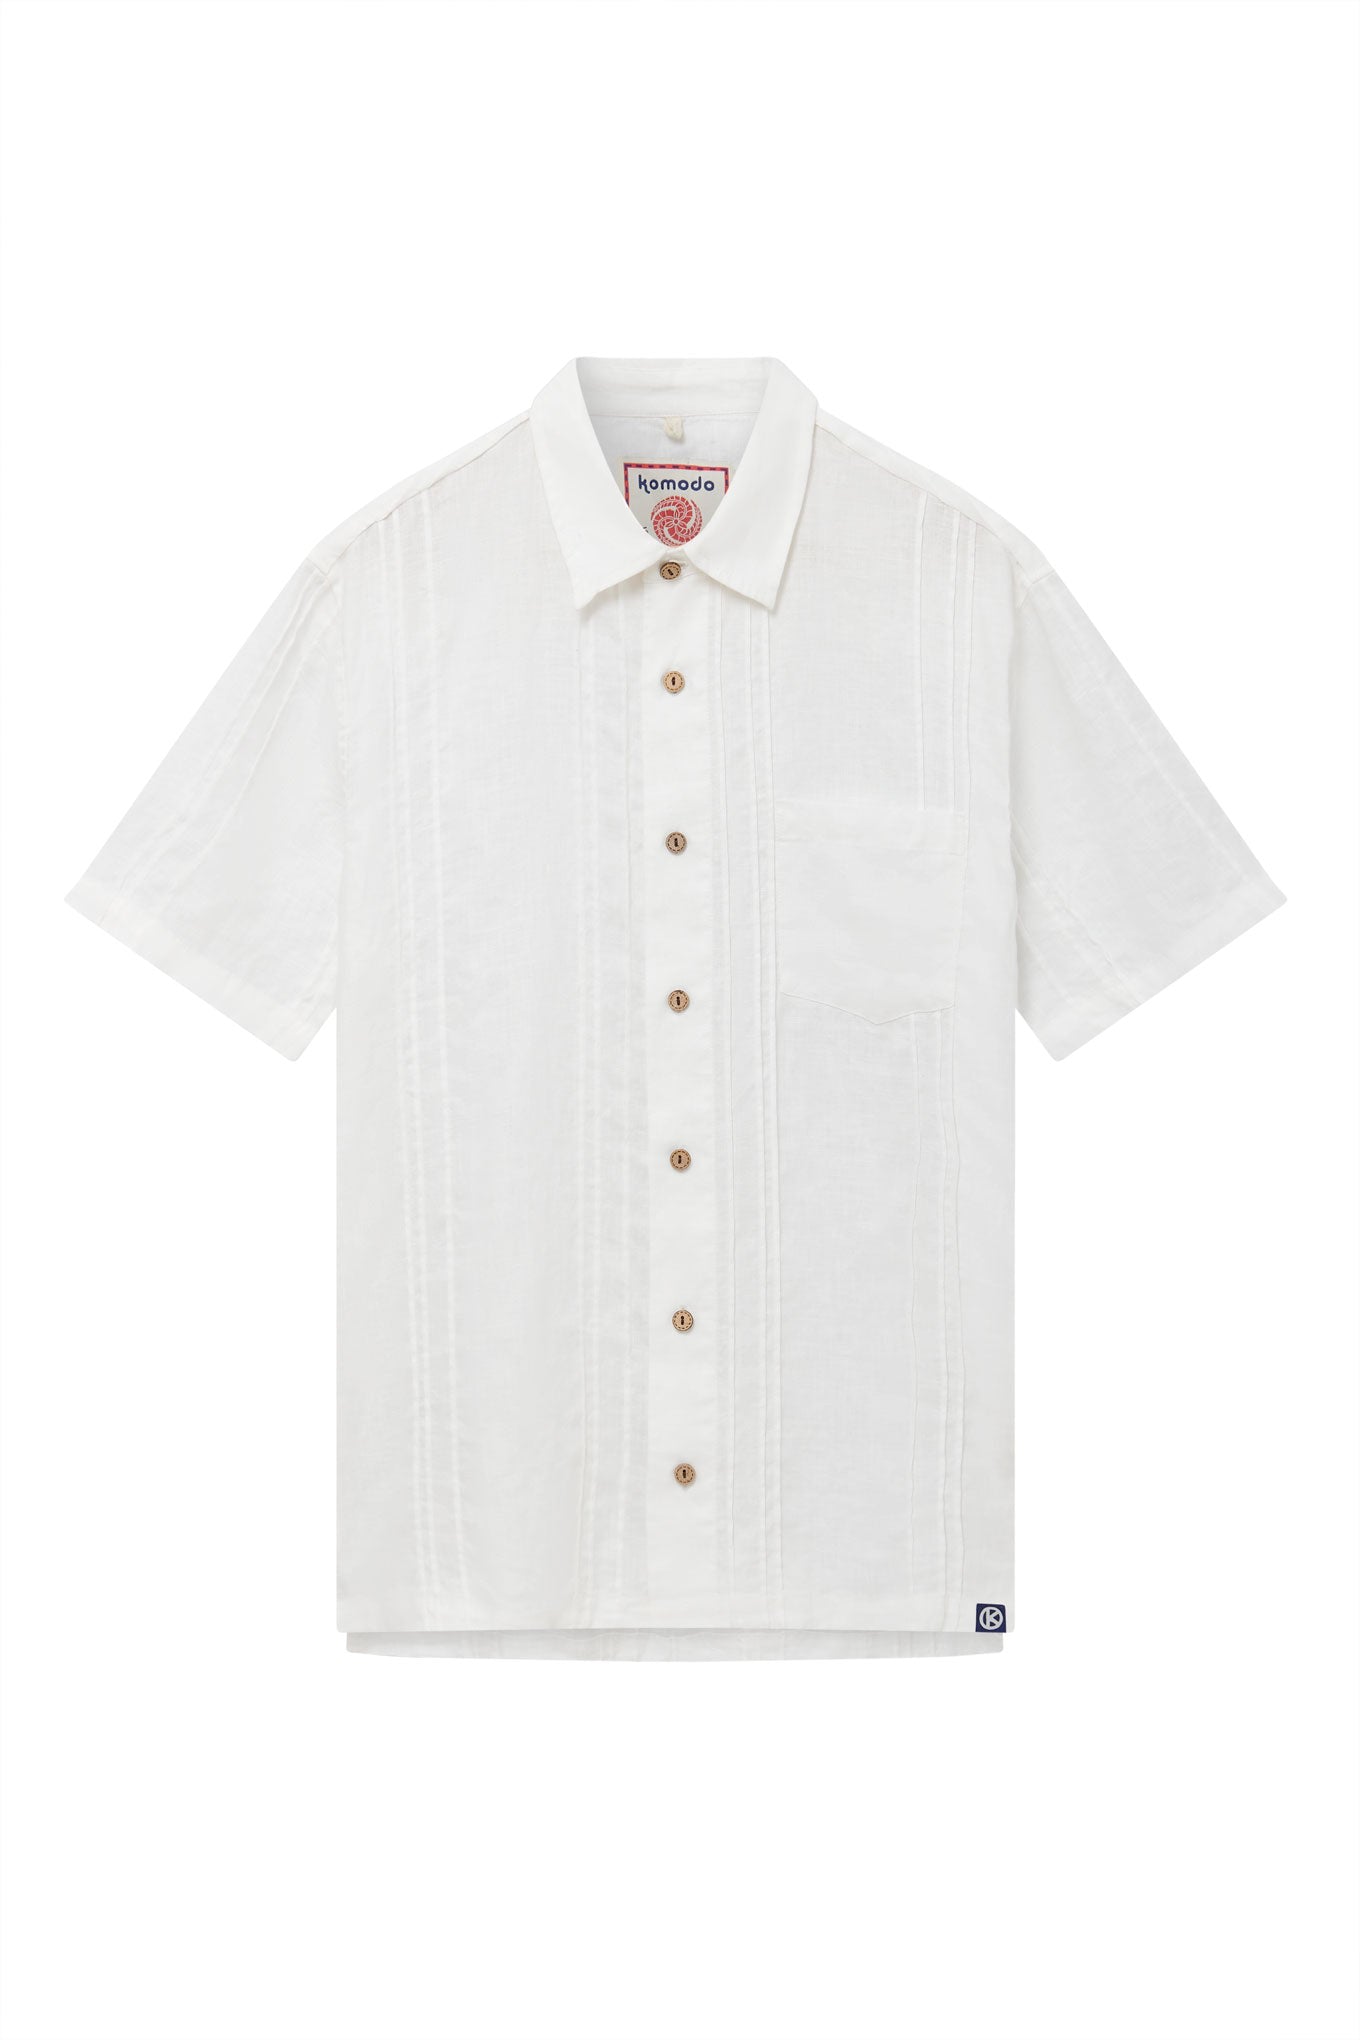 Komodo Men's Leo - Linen Shirt Off White